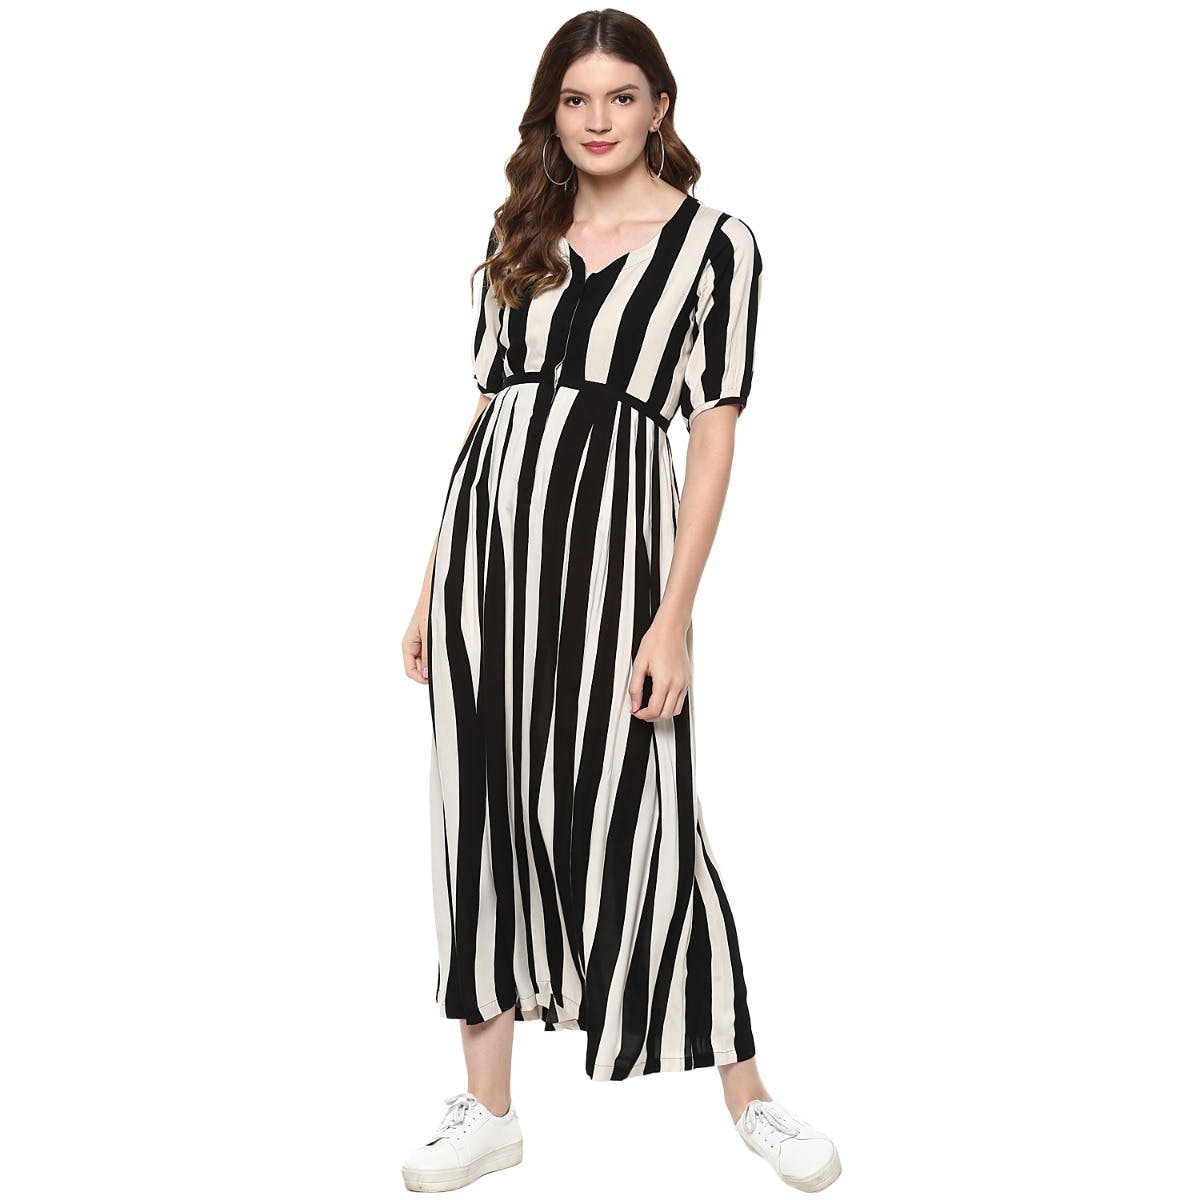 vertical striped midi dress